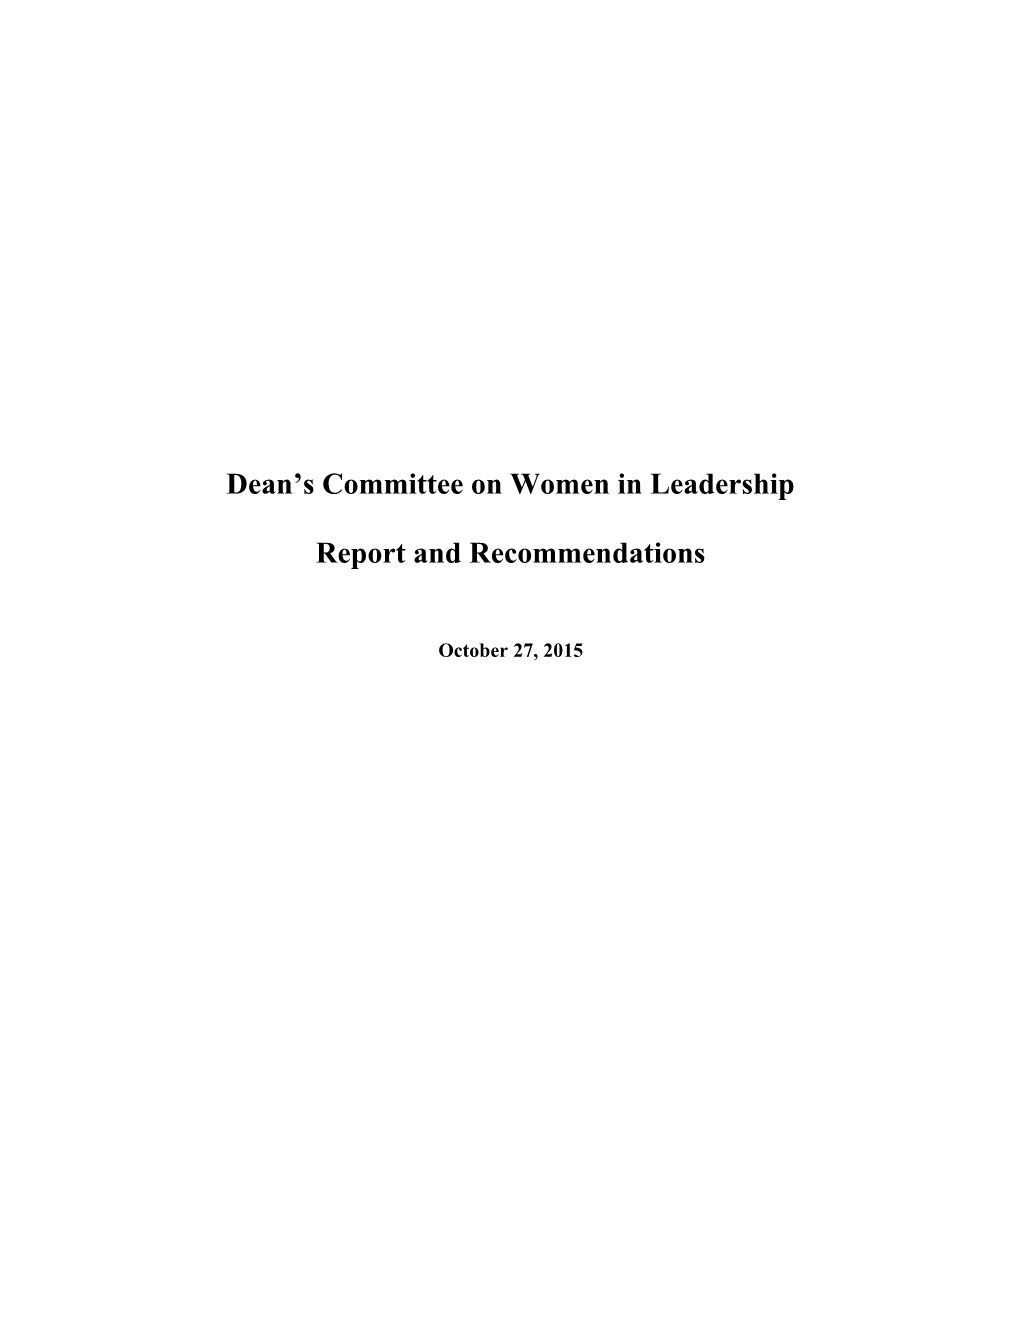 Dean S Committee on Women in Leadership